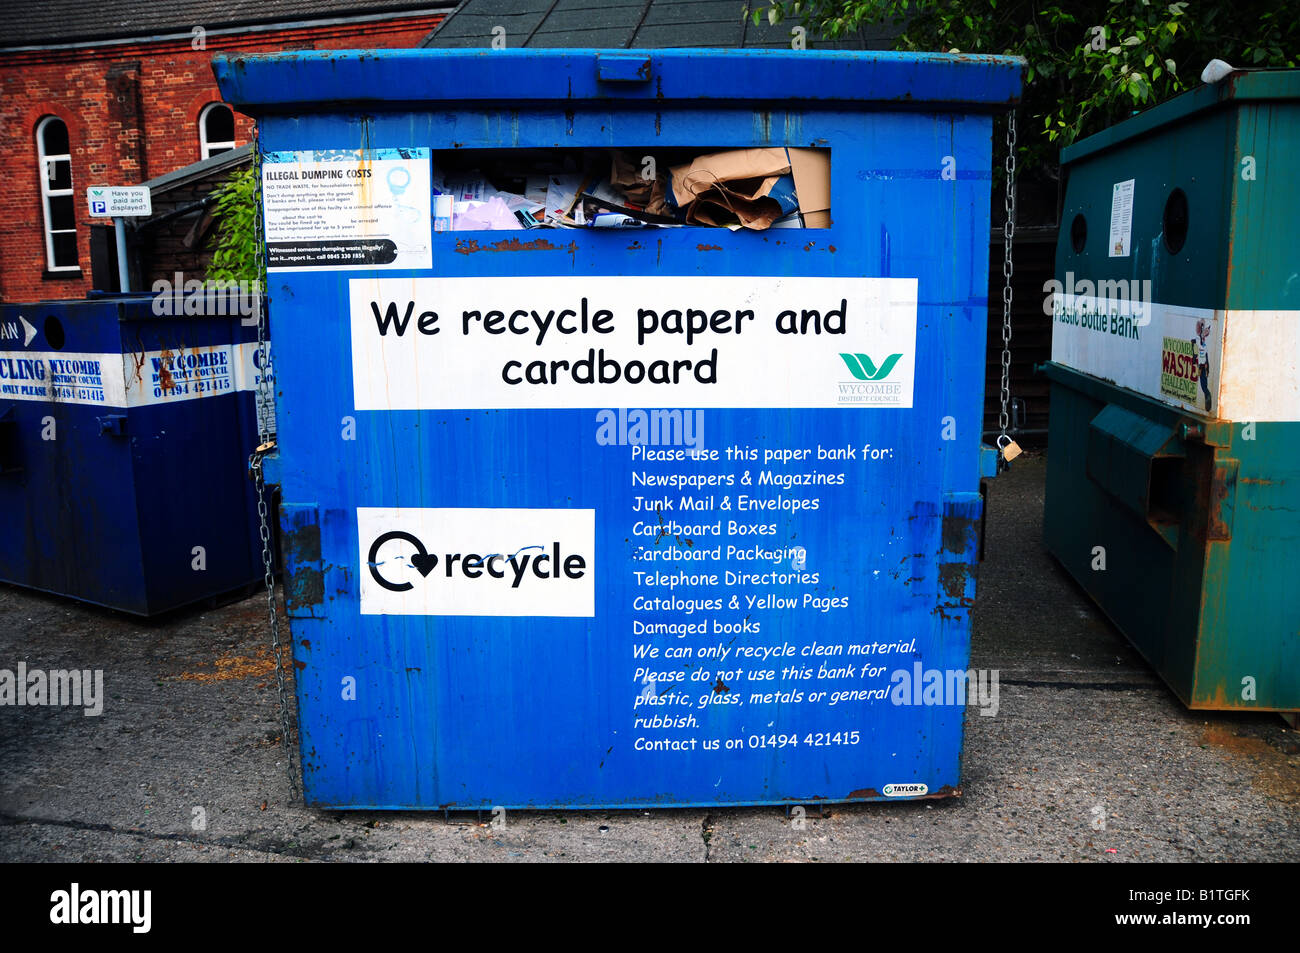 Paper and cardboard recycling bank, Bucks, UK Stock Photo